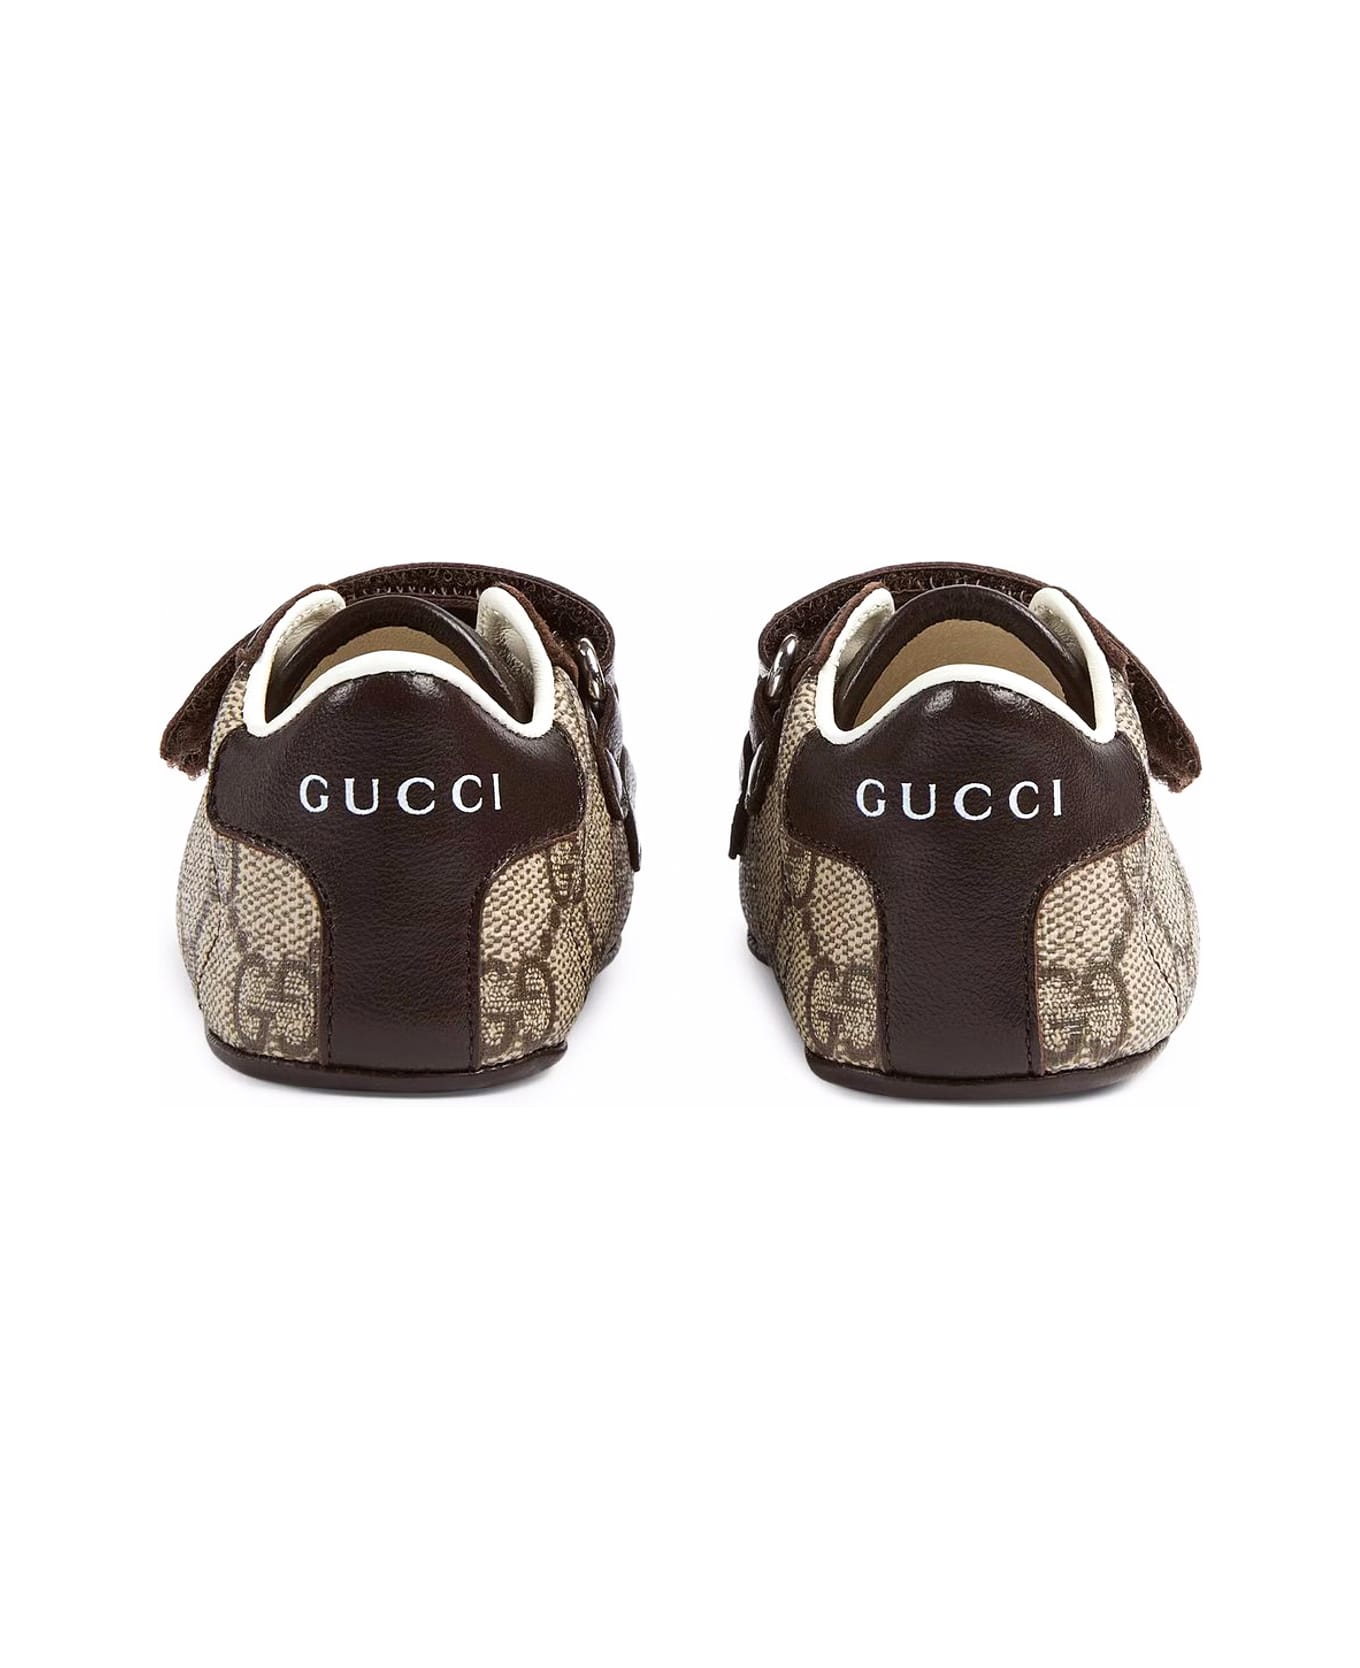 Gucci Kids Boots Beige - Beige シューズ